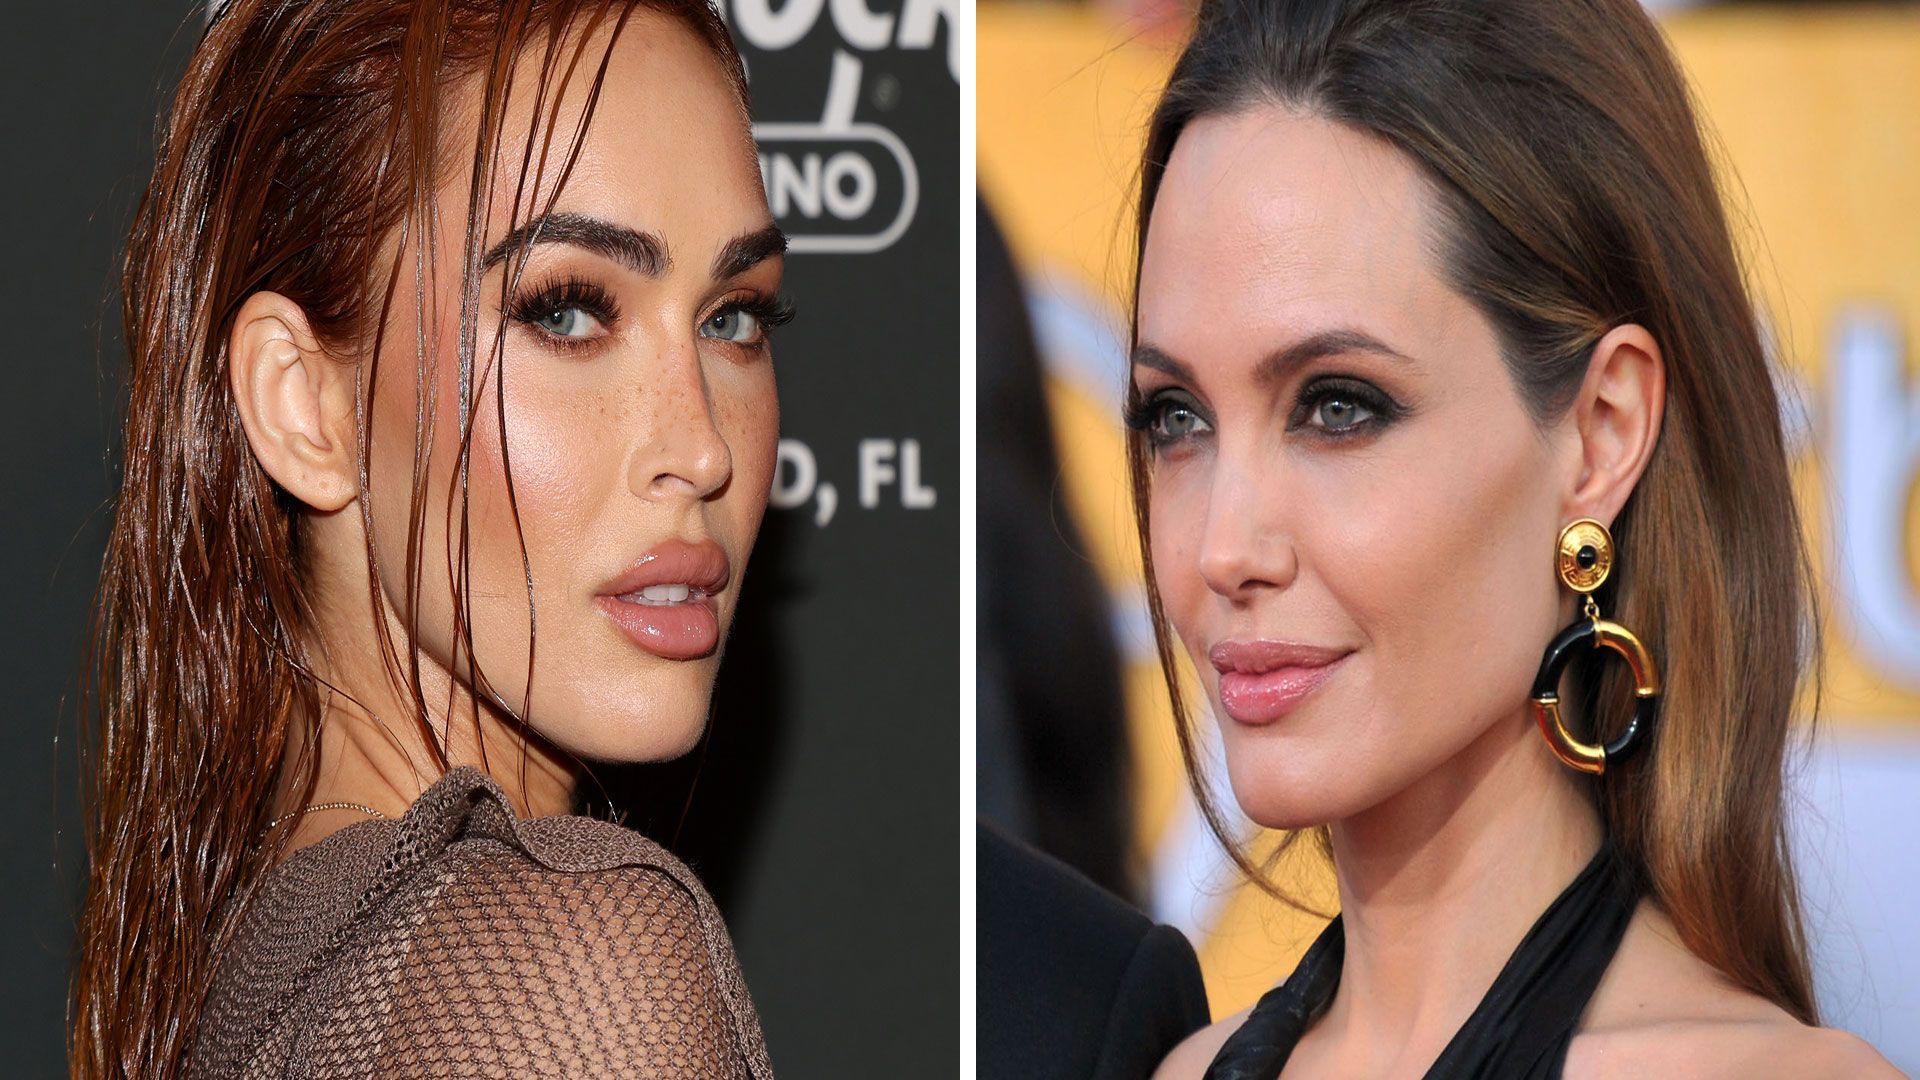 Angelina Jolie and Megan Fox